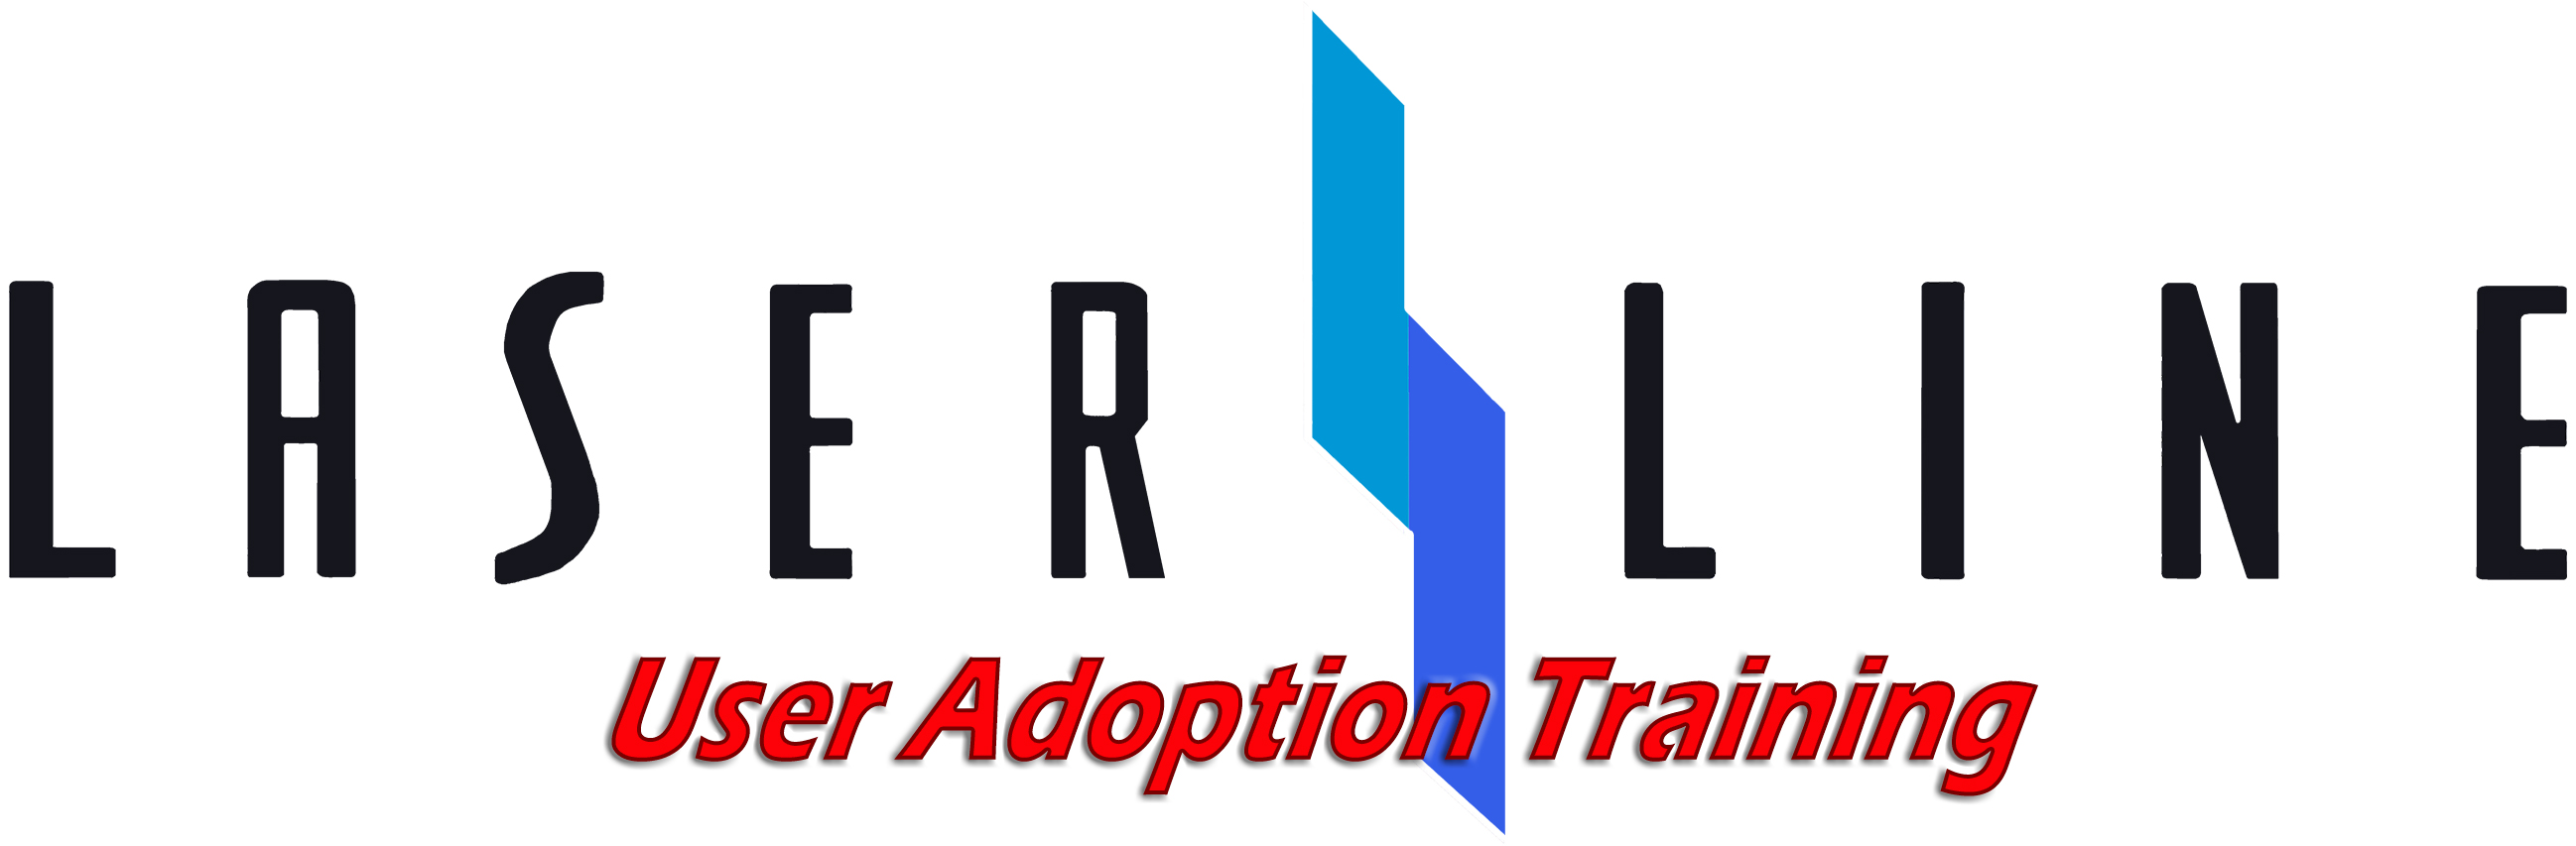 User Adoption Training